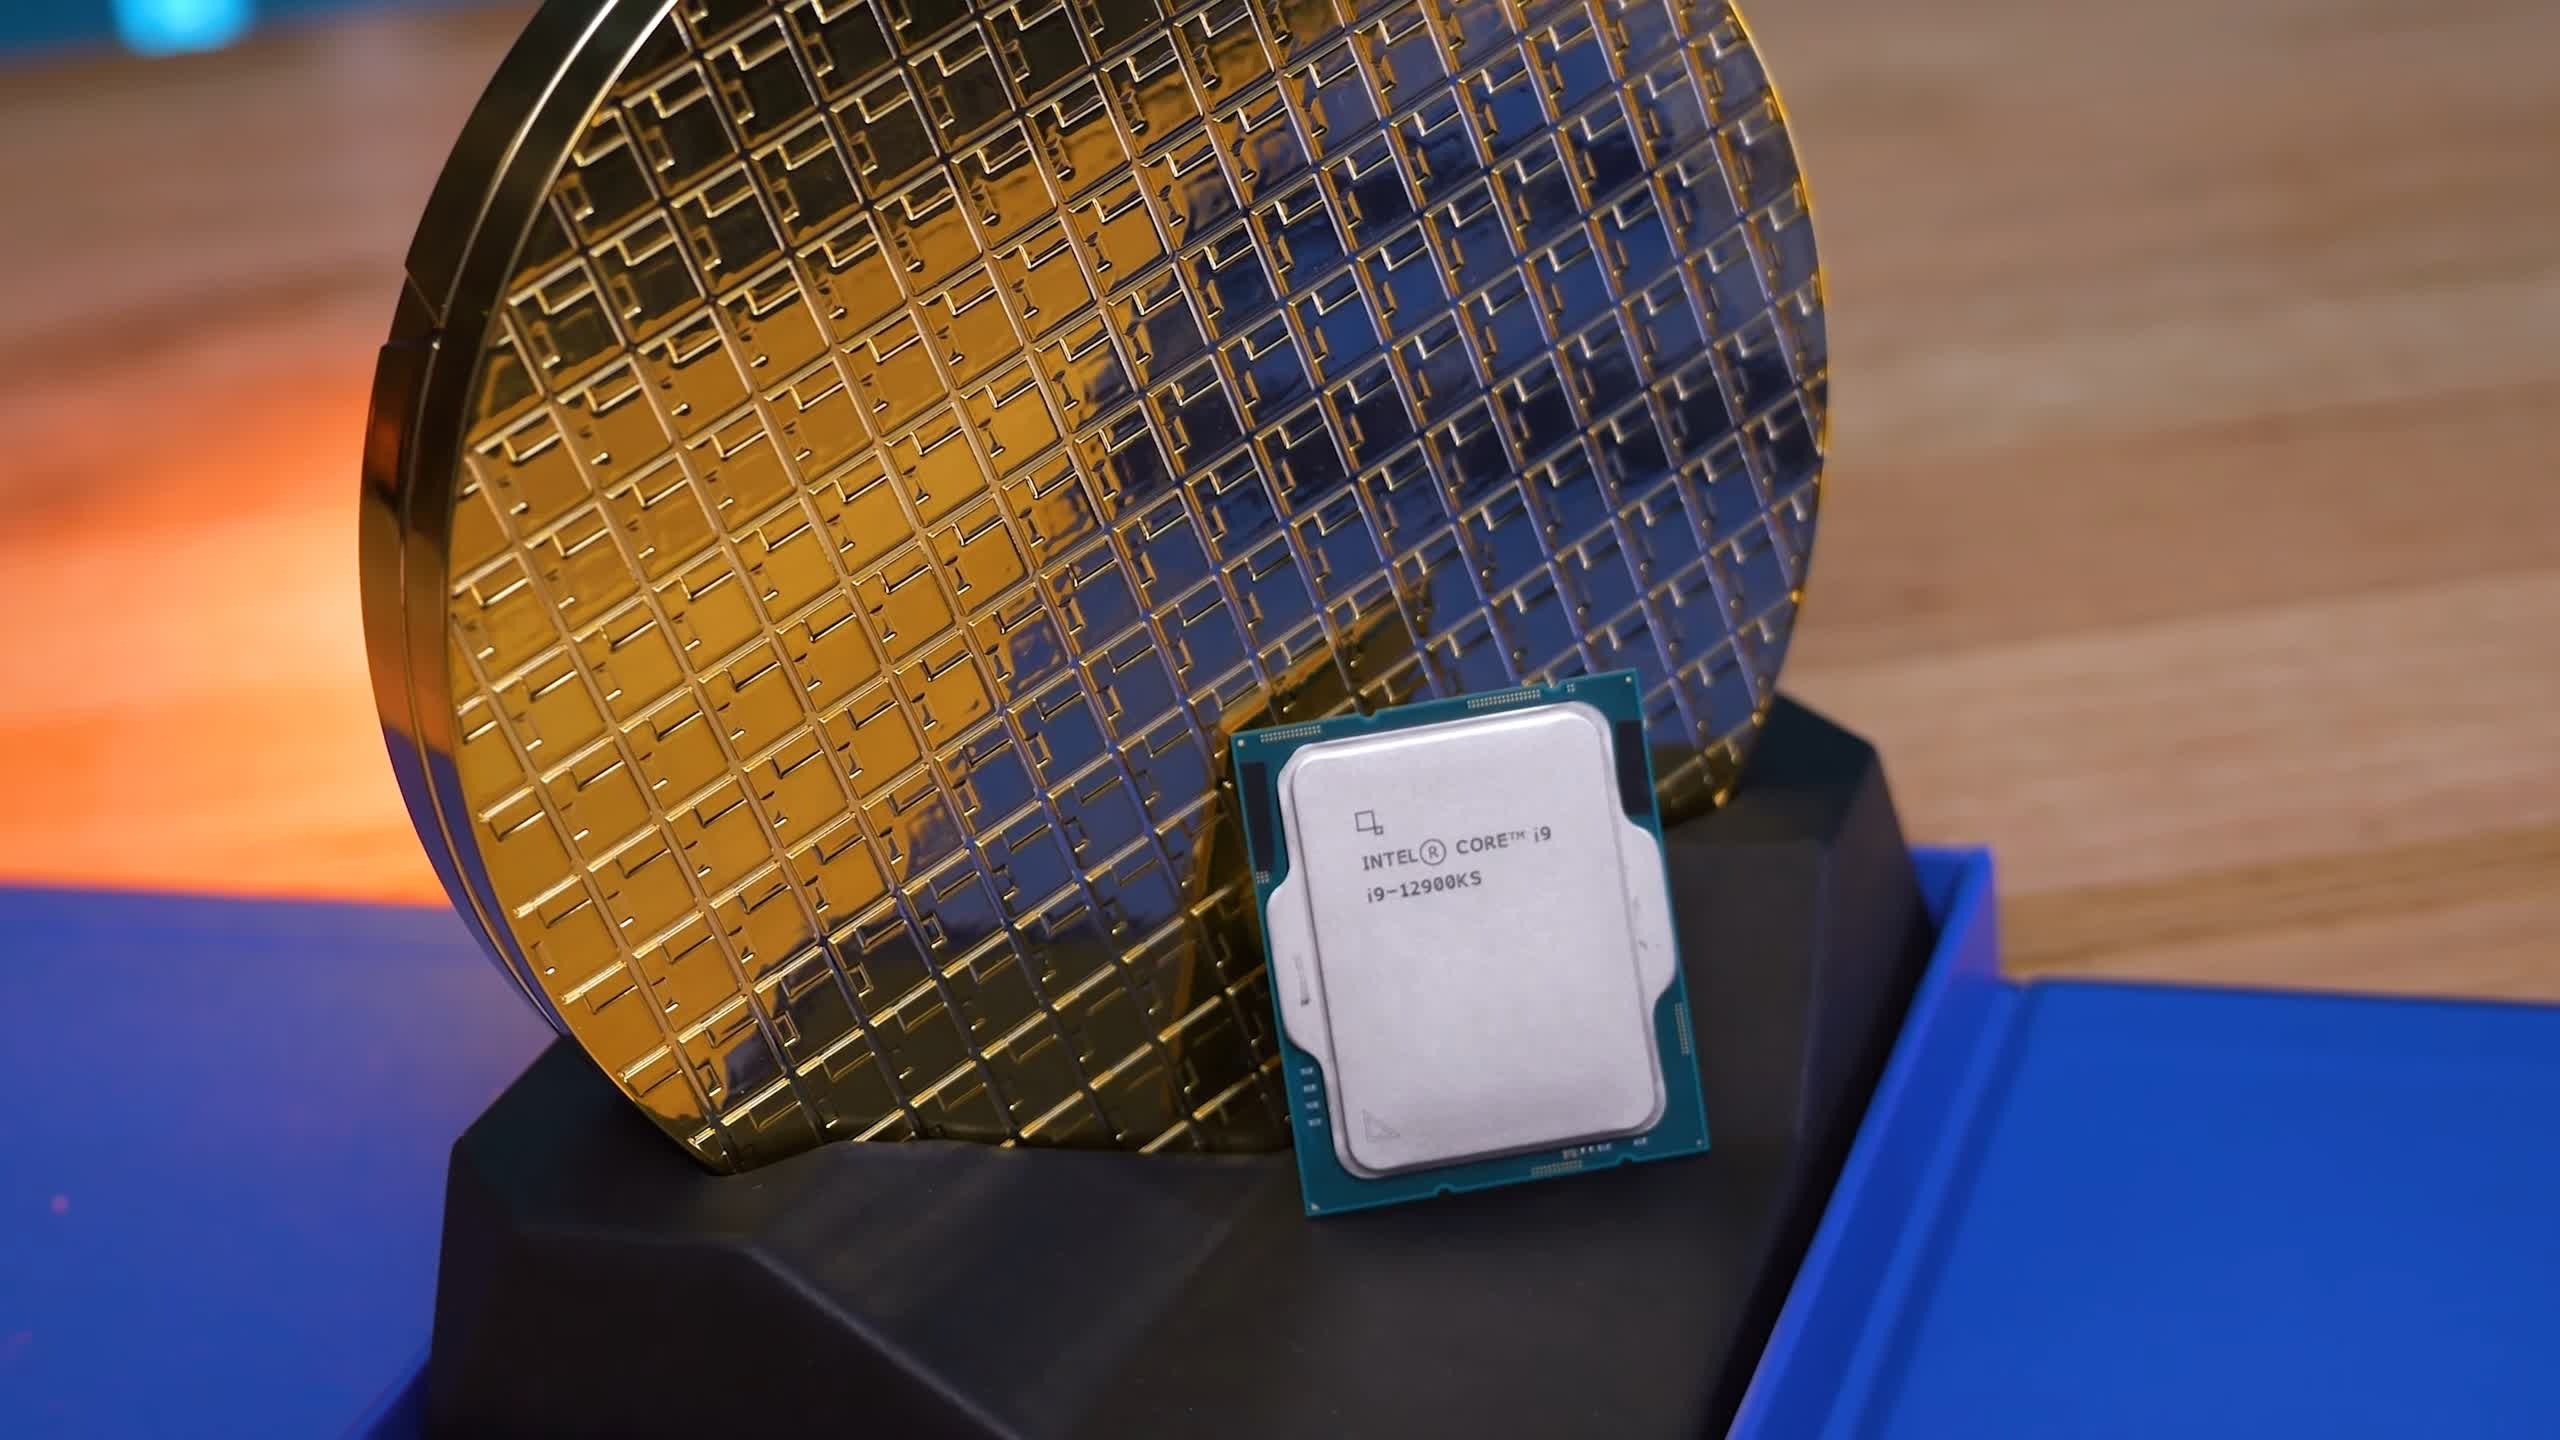 Intel changes packaging for Core i9-12900KS Alder Lake CPU